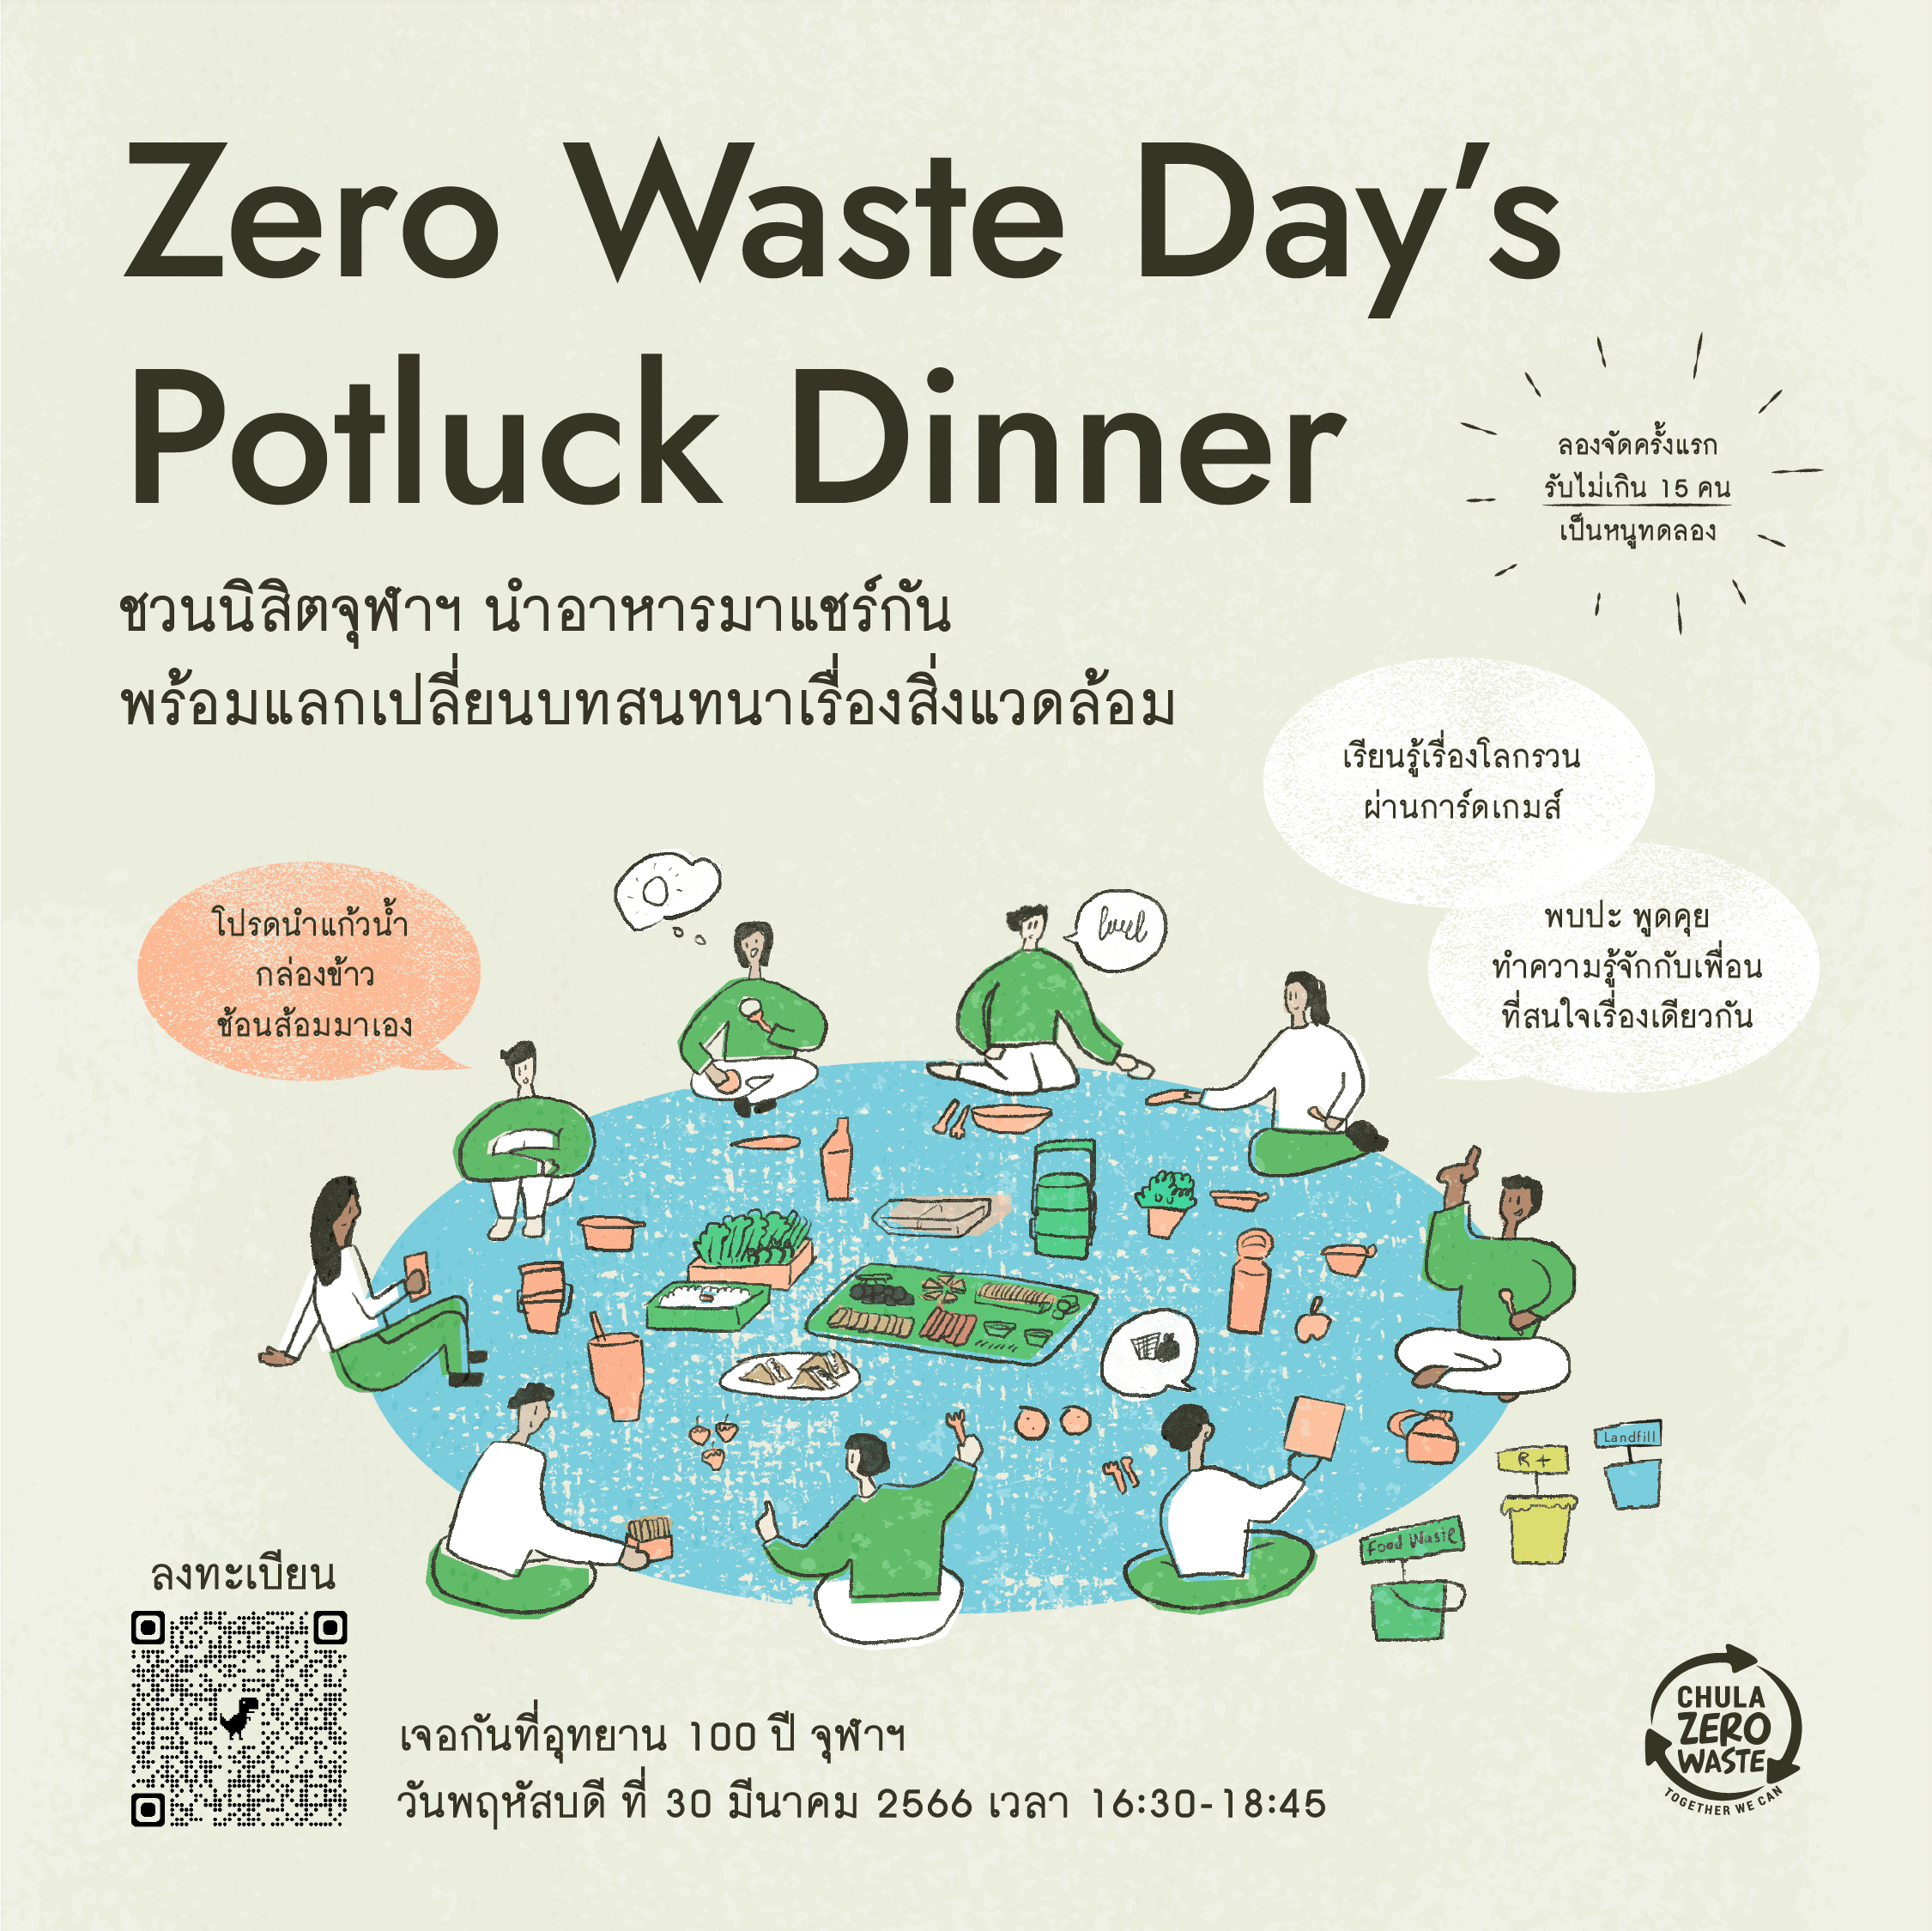 Chula Zero Waste_Zero-Waste Day's-Potluck-Dinner-03